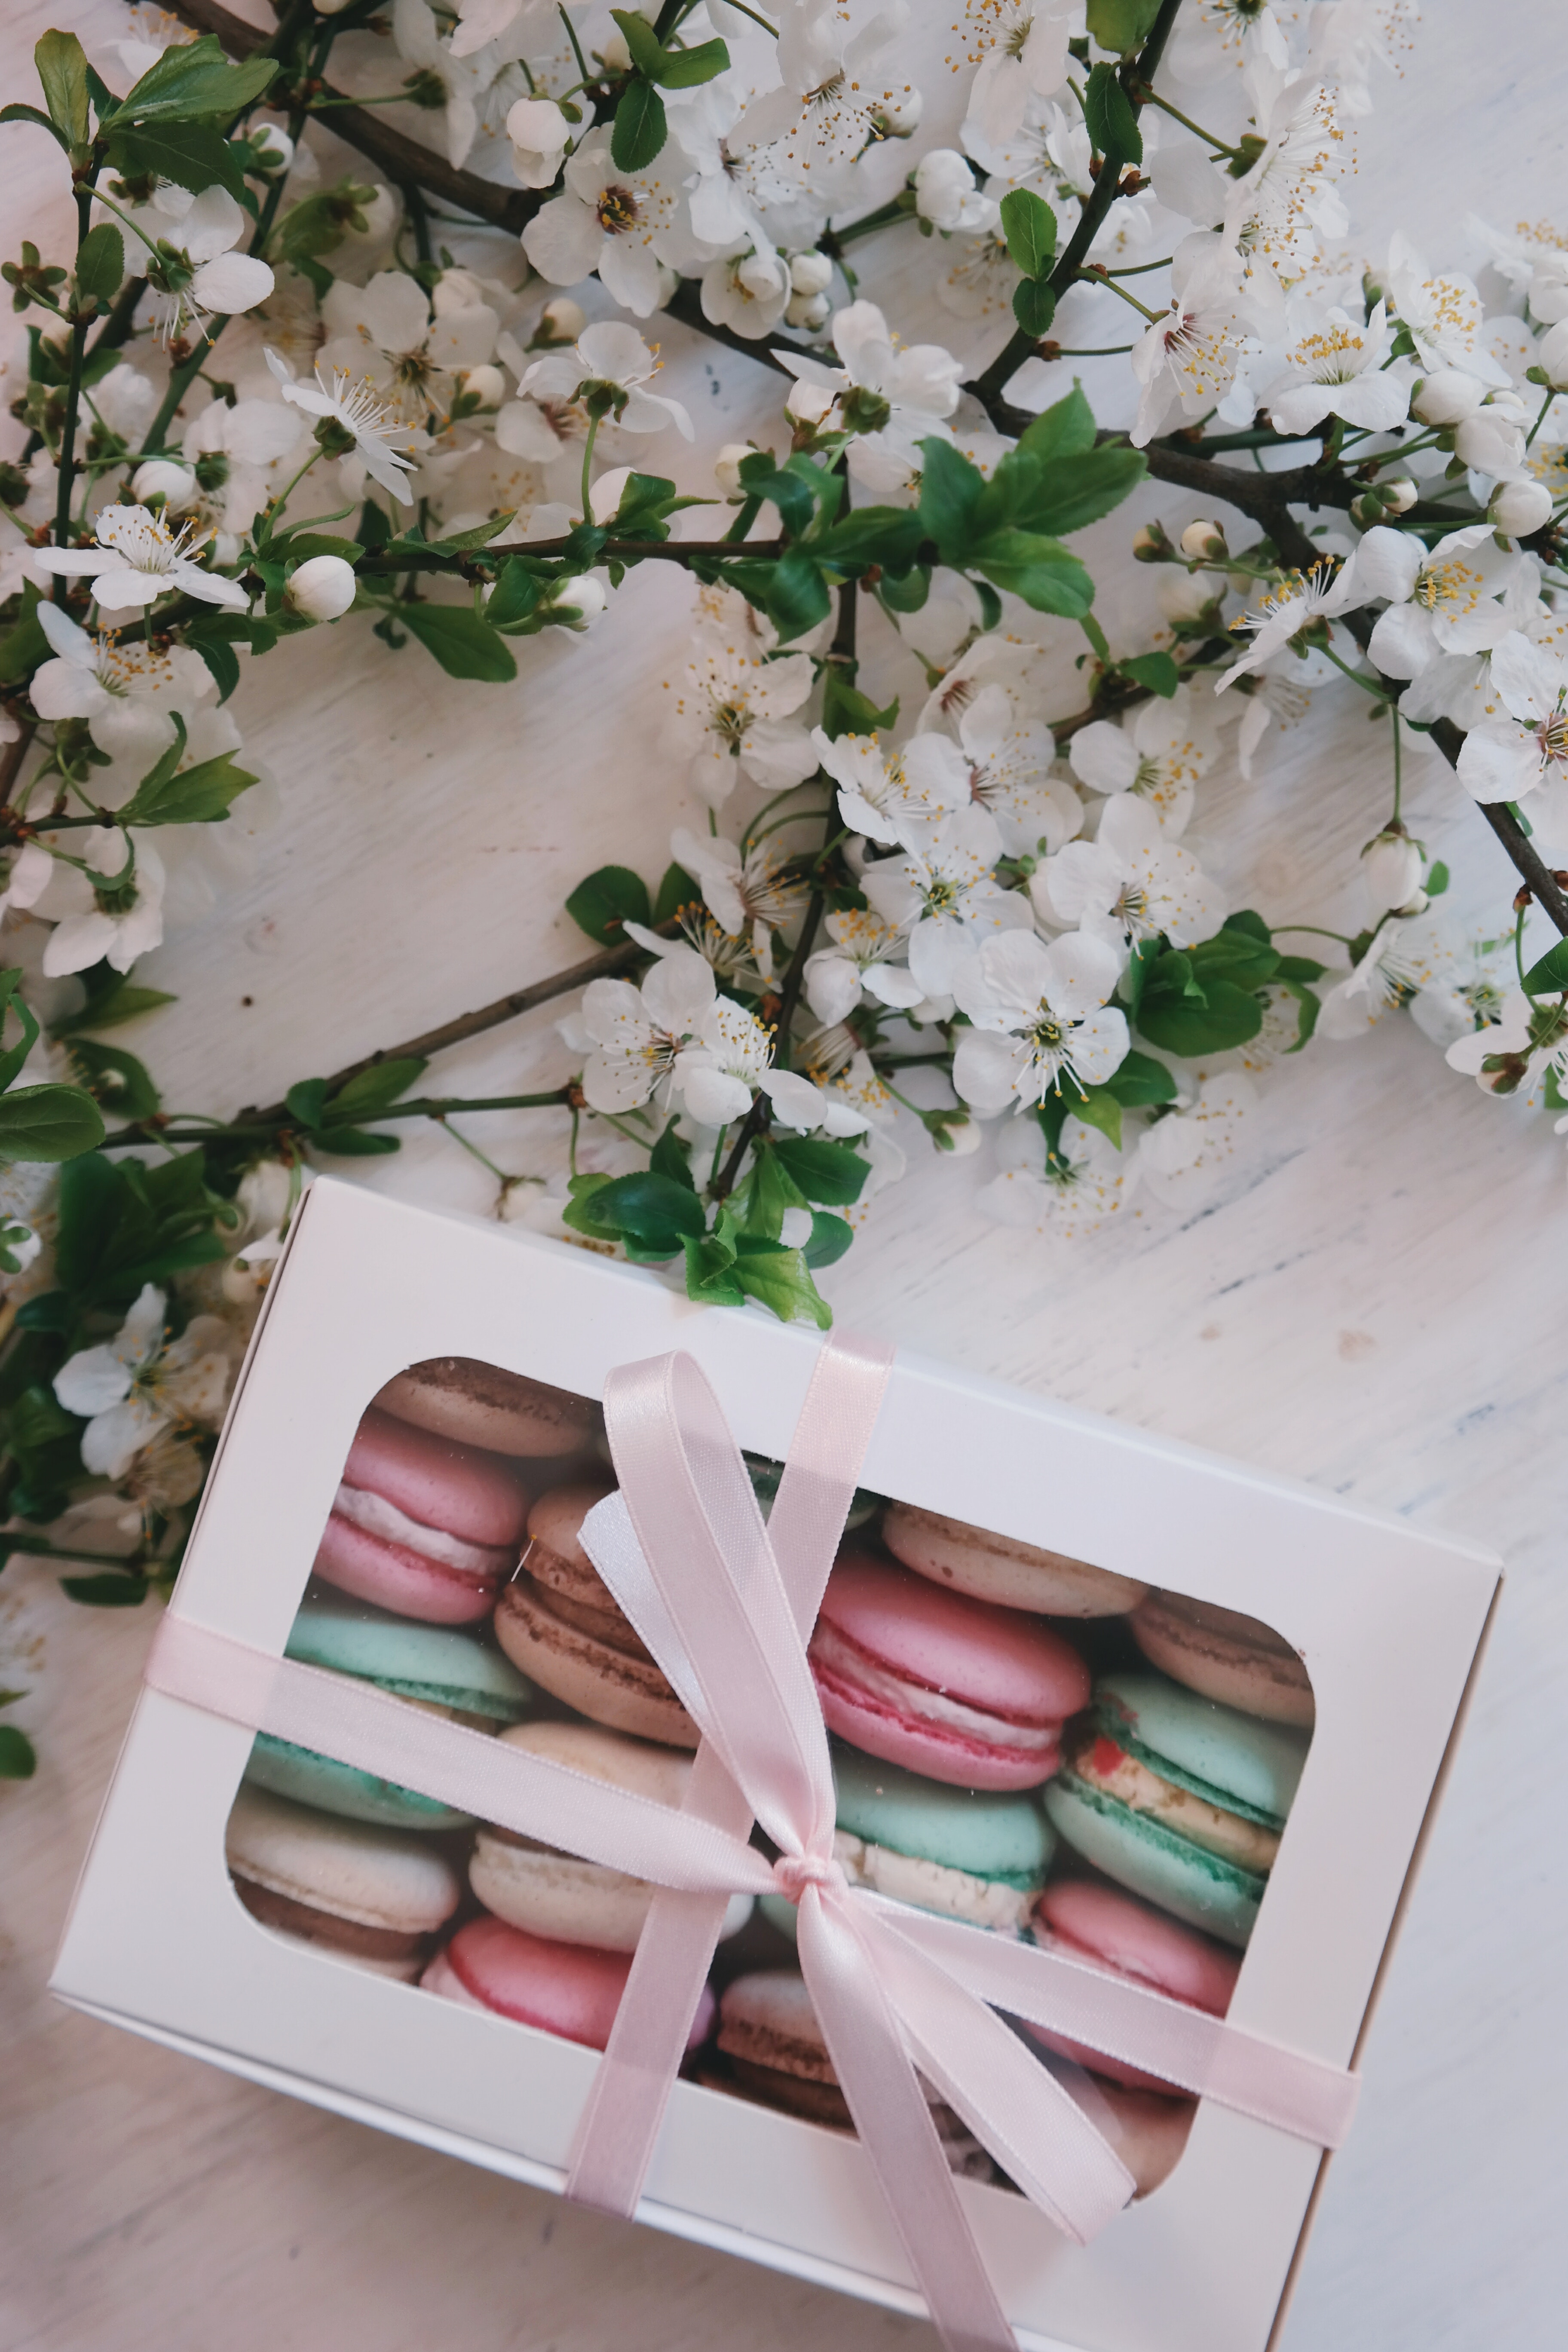 Macaron, cakes, cherry blossom tree free stock photo